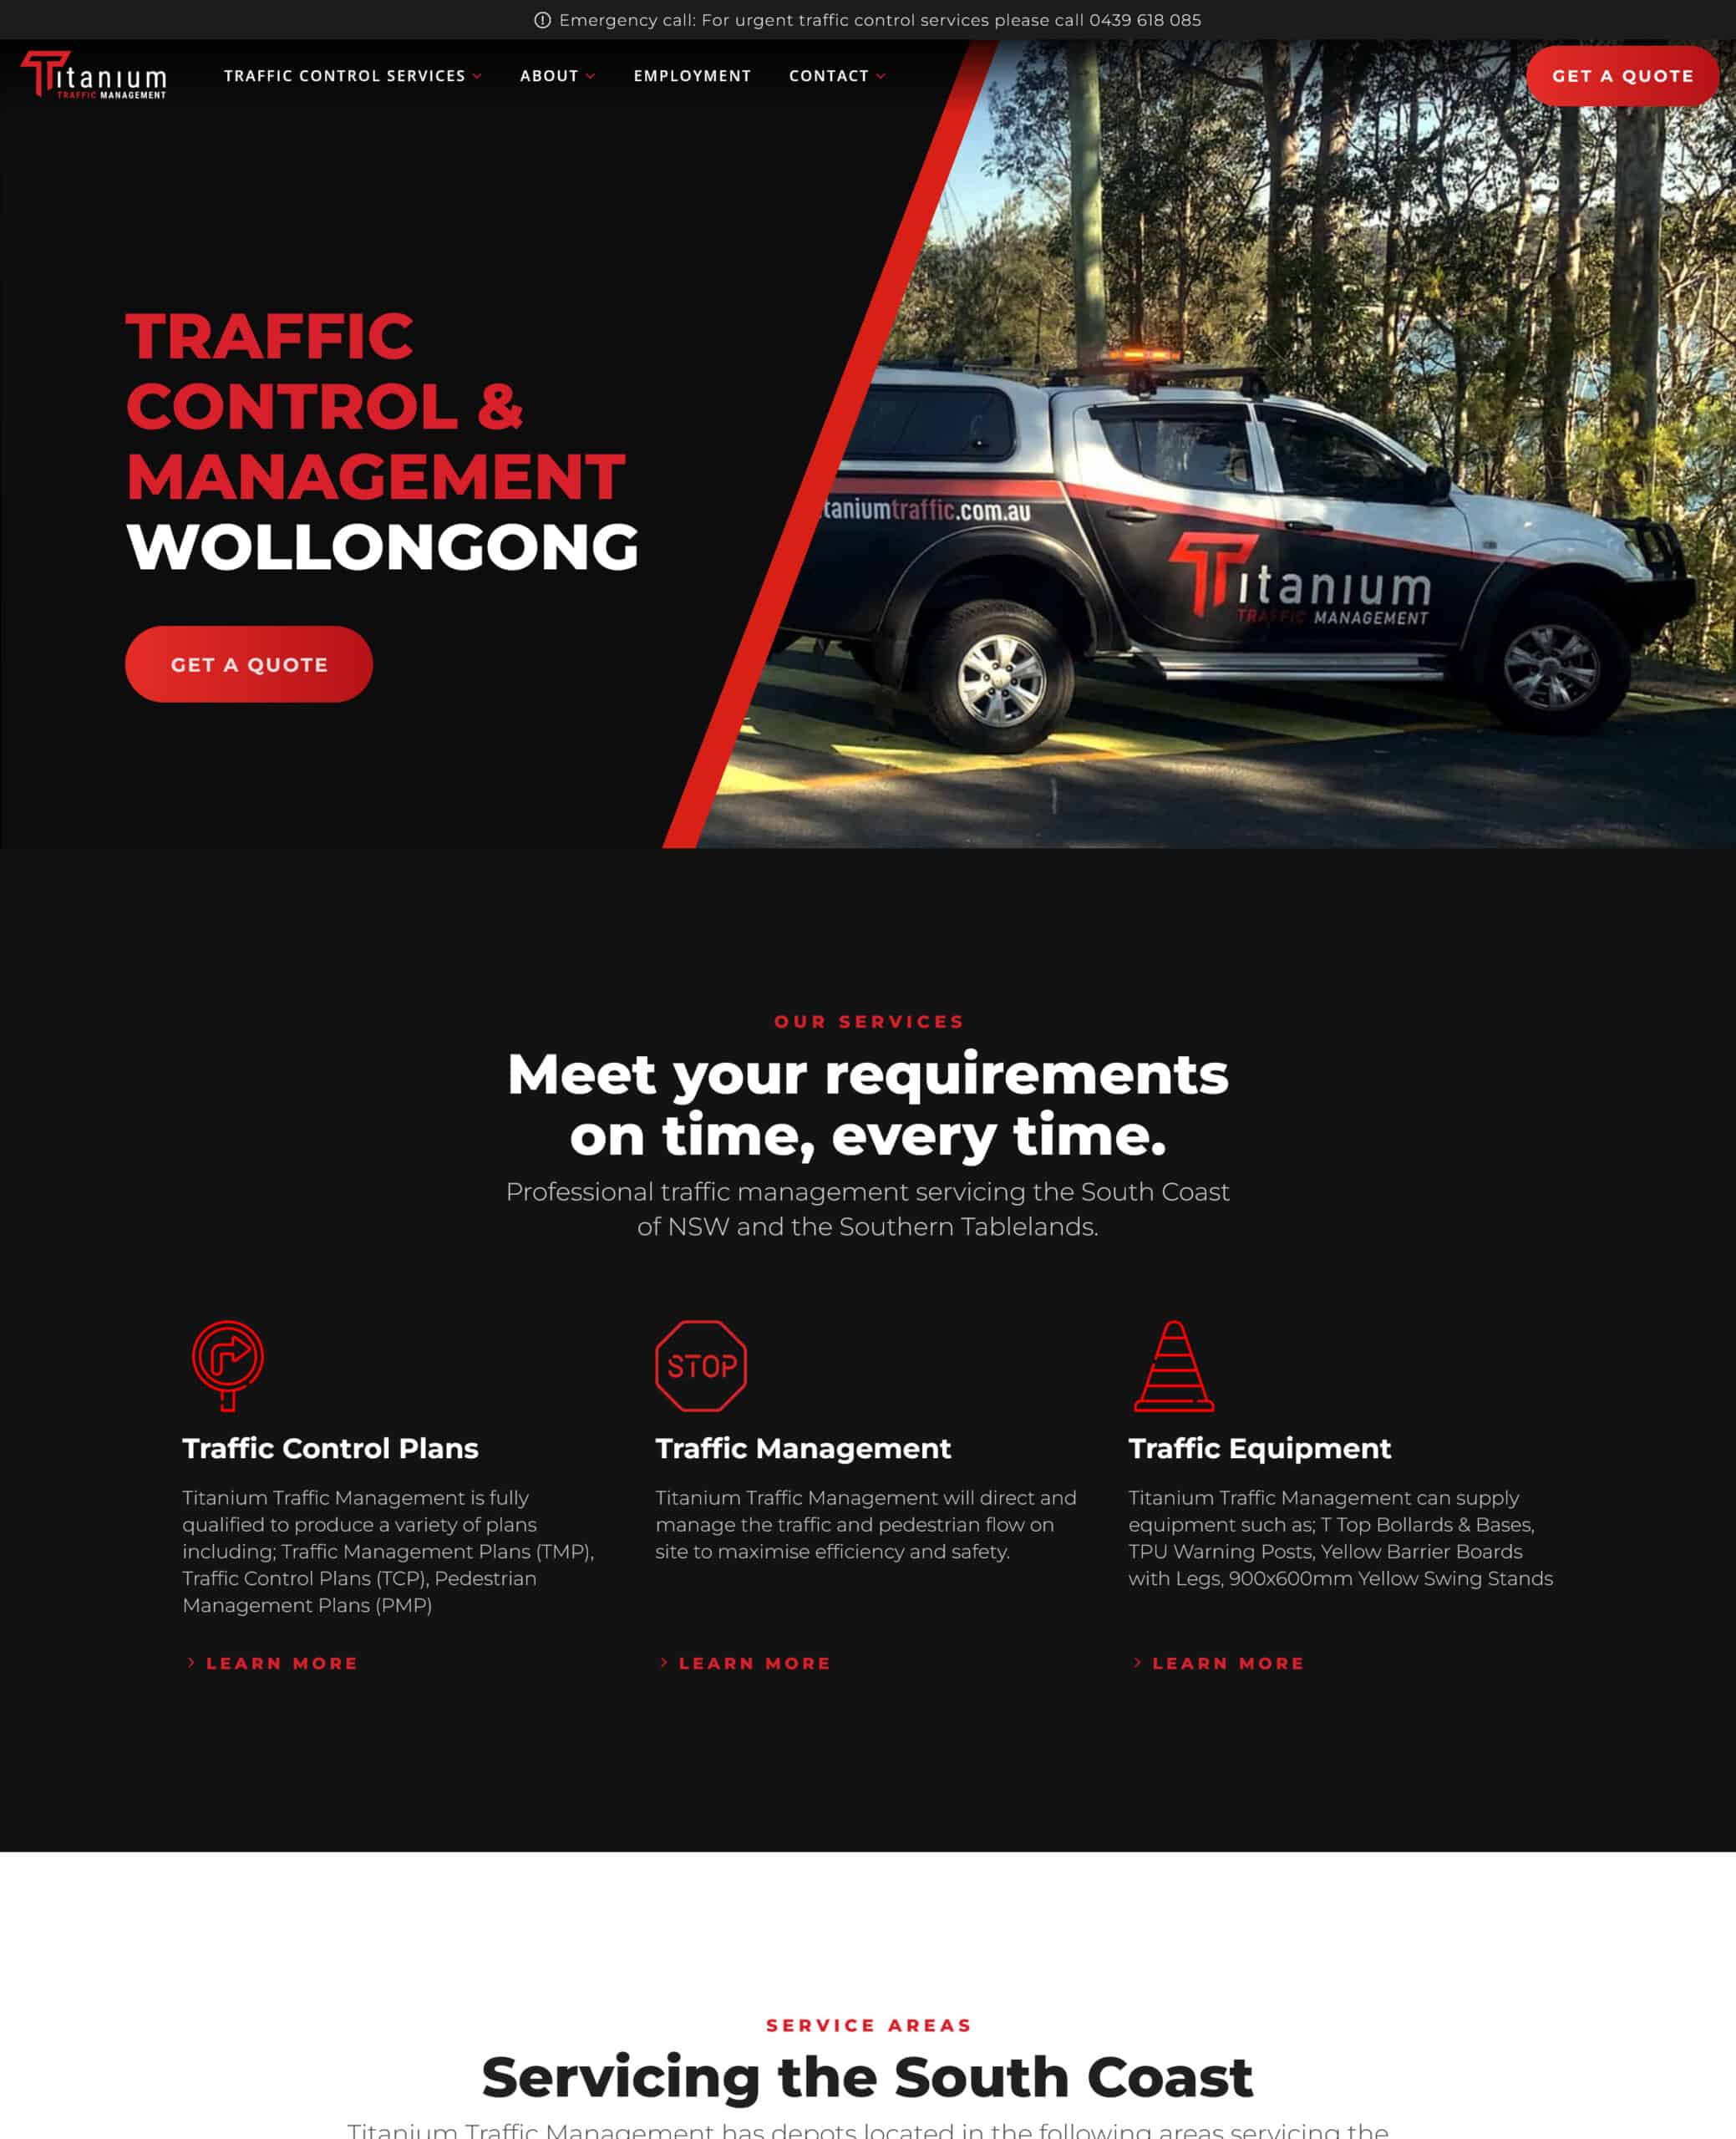 Titanium Traffic Management Wollongong UX design screenshot of WordPress website, homepage